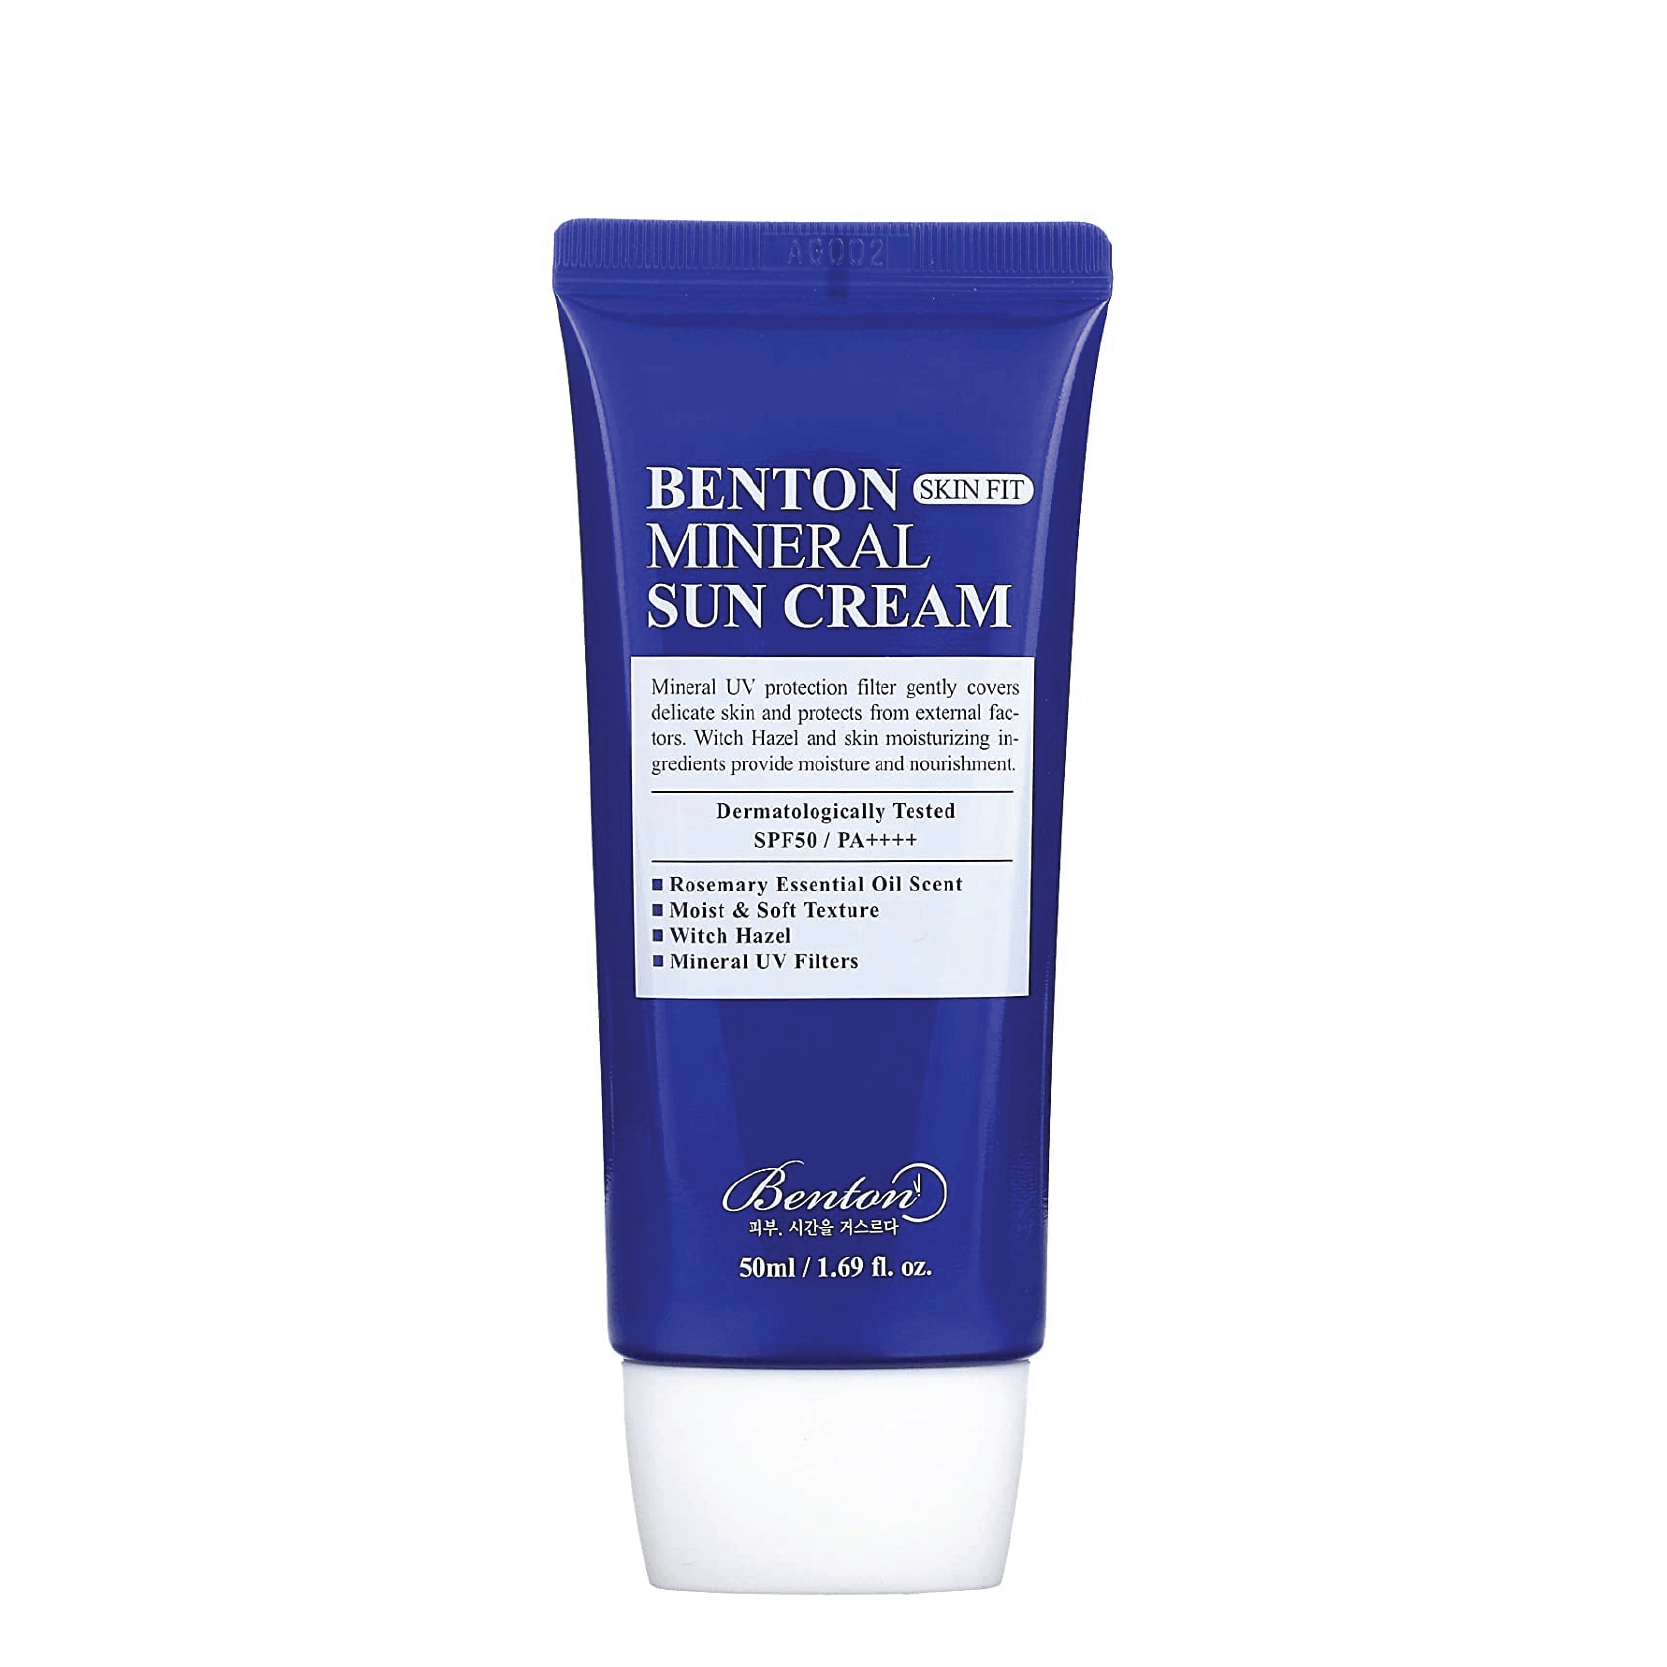 Benton Skin Fit Mineral Sun Cream SPF50+ PA++++ Benton